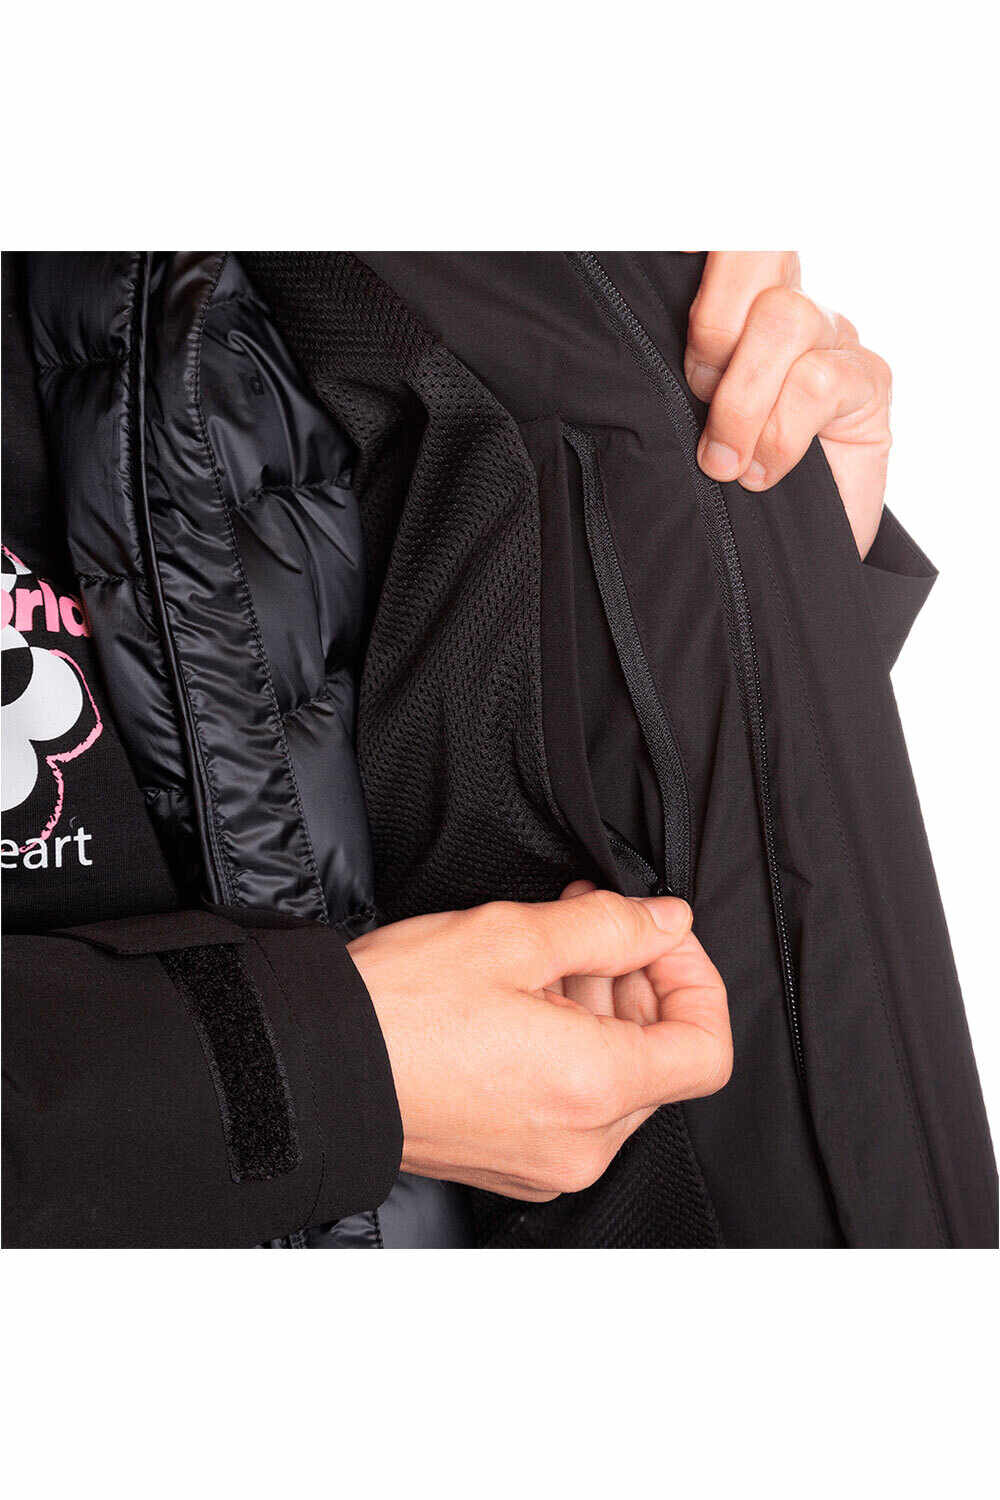 Trango chaqueta impermeable insulada mujer BRUKET COMPLET 05